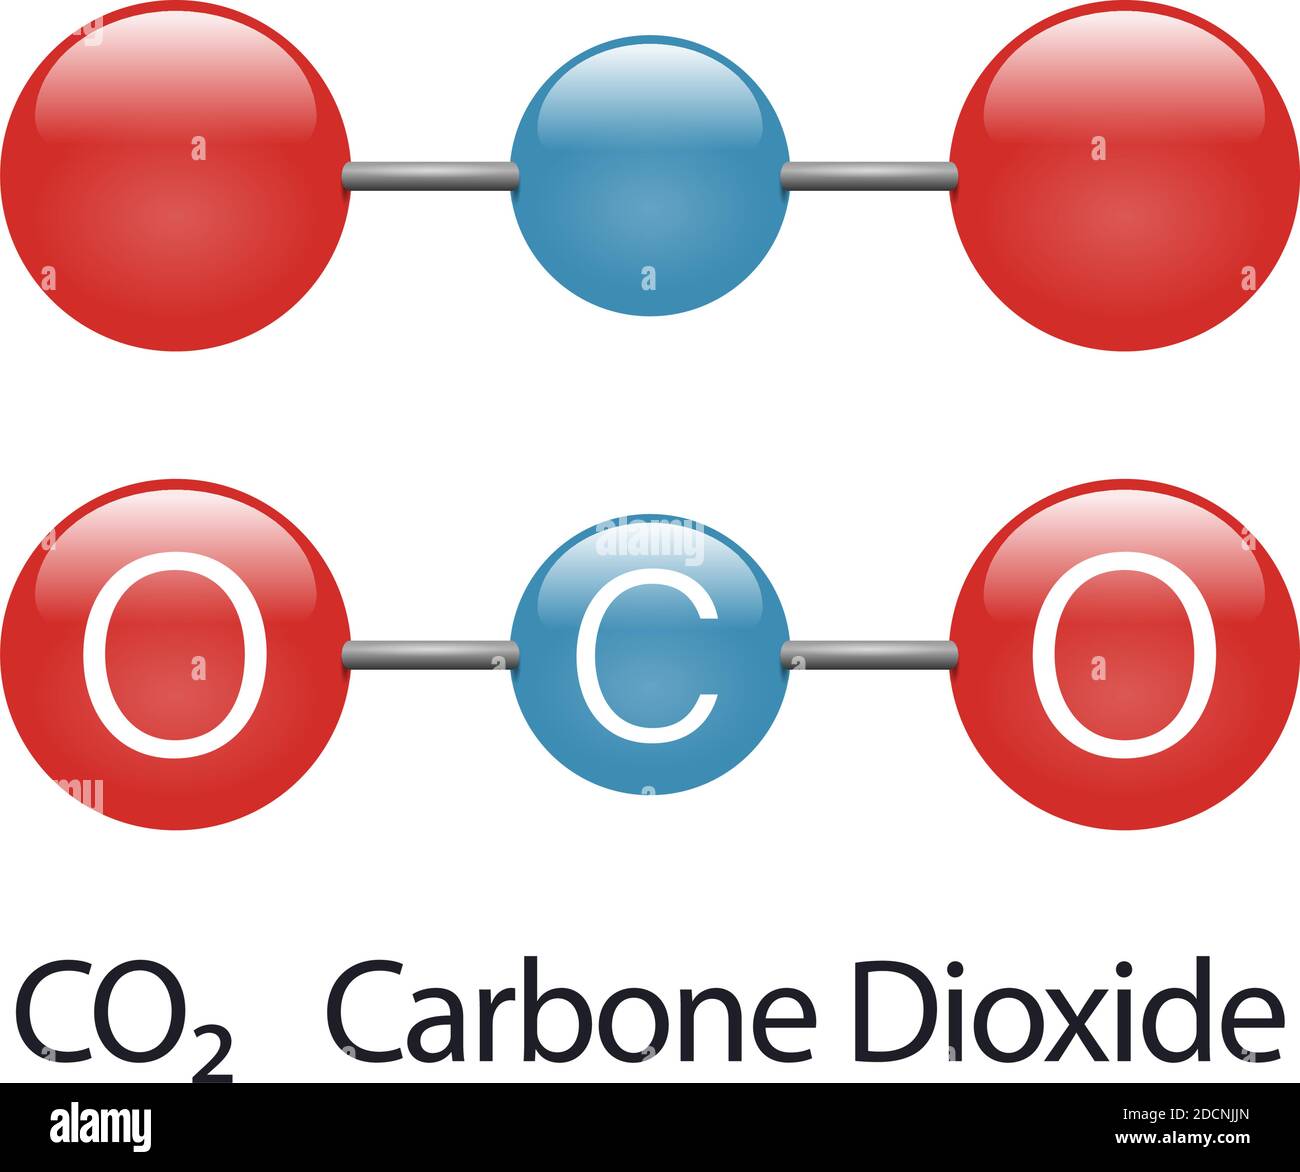 Kohlendioxid Treibhausgas Atom Modell co2 rot blau Vektor Abbildung Stock Vektor